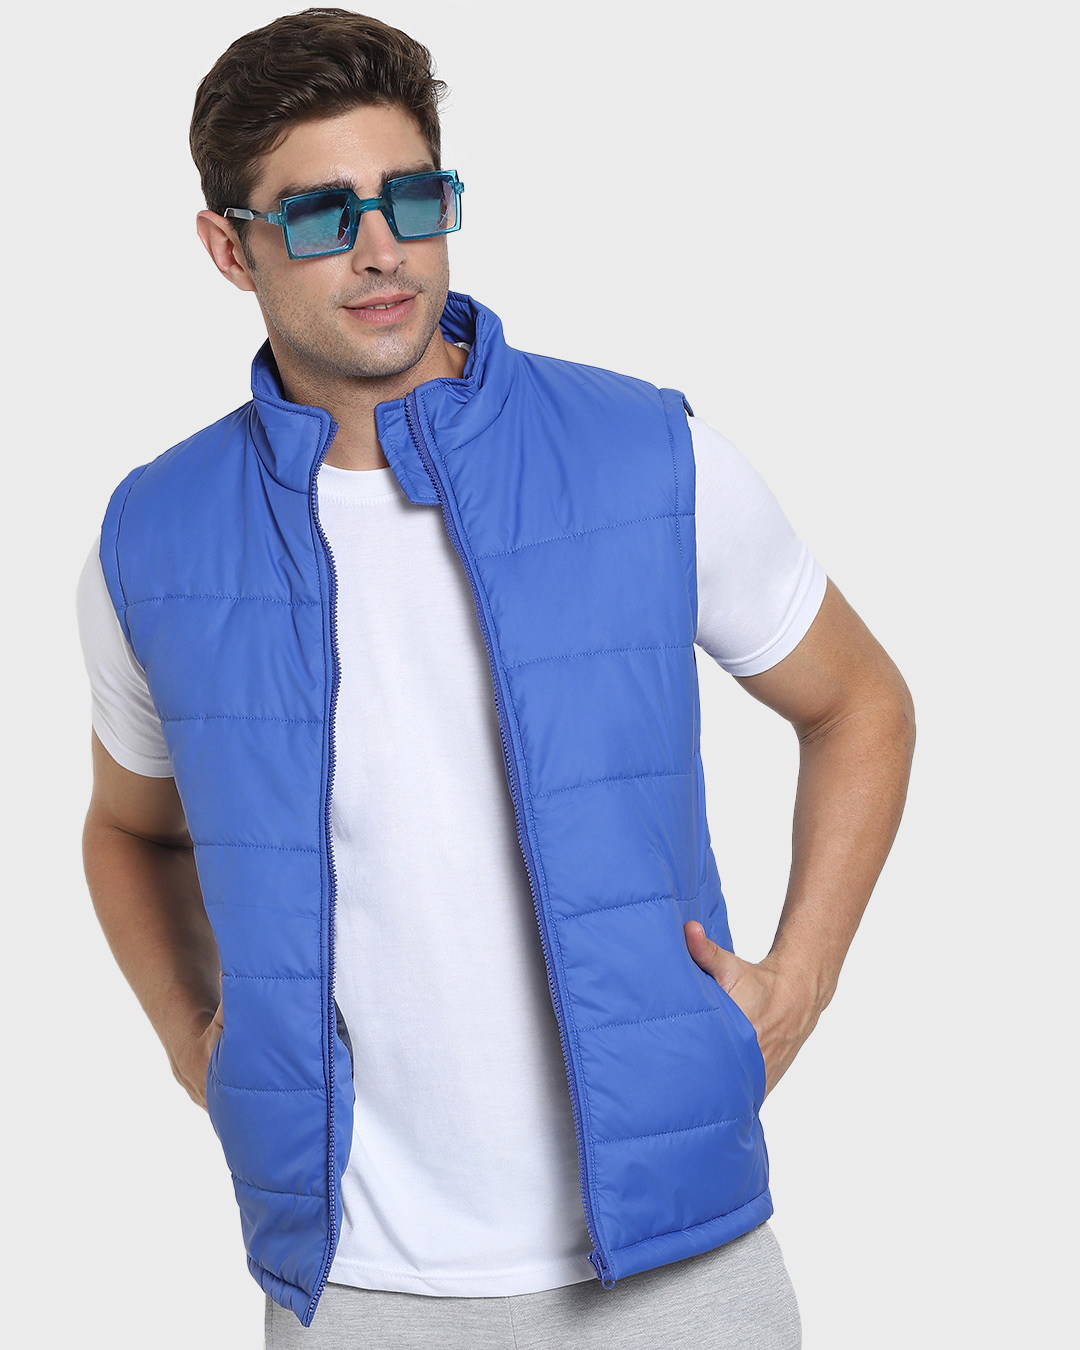 Buy Royal Blue Sleeveless Puffer Jacket Online at Bewakoof